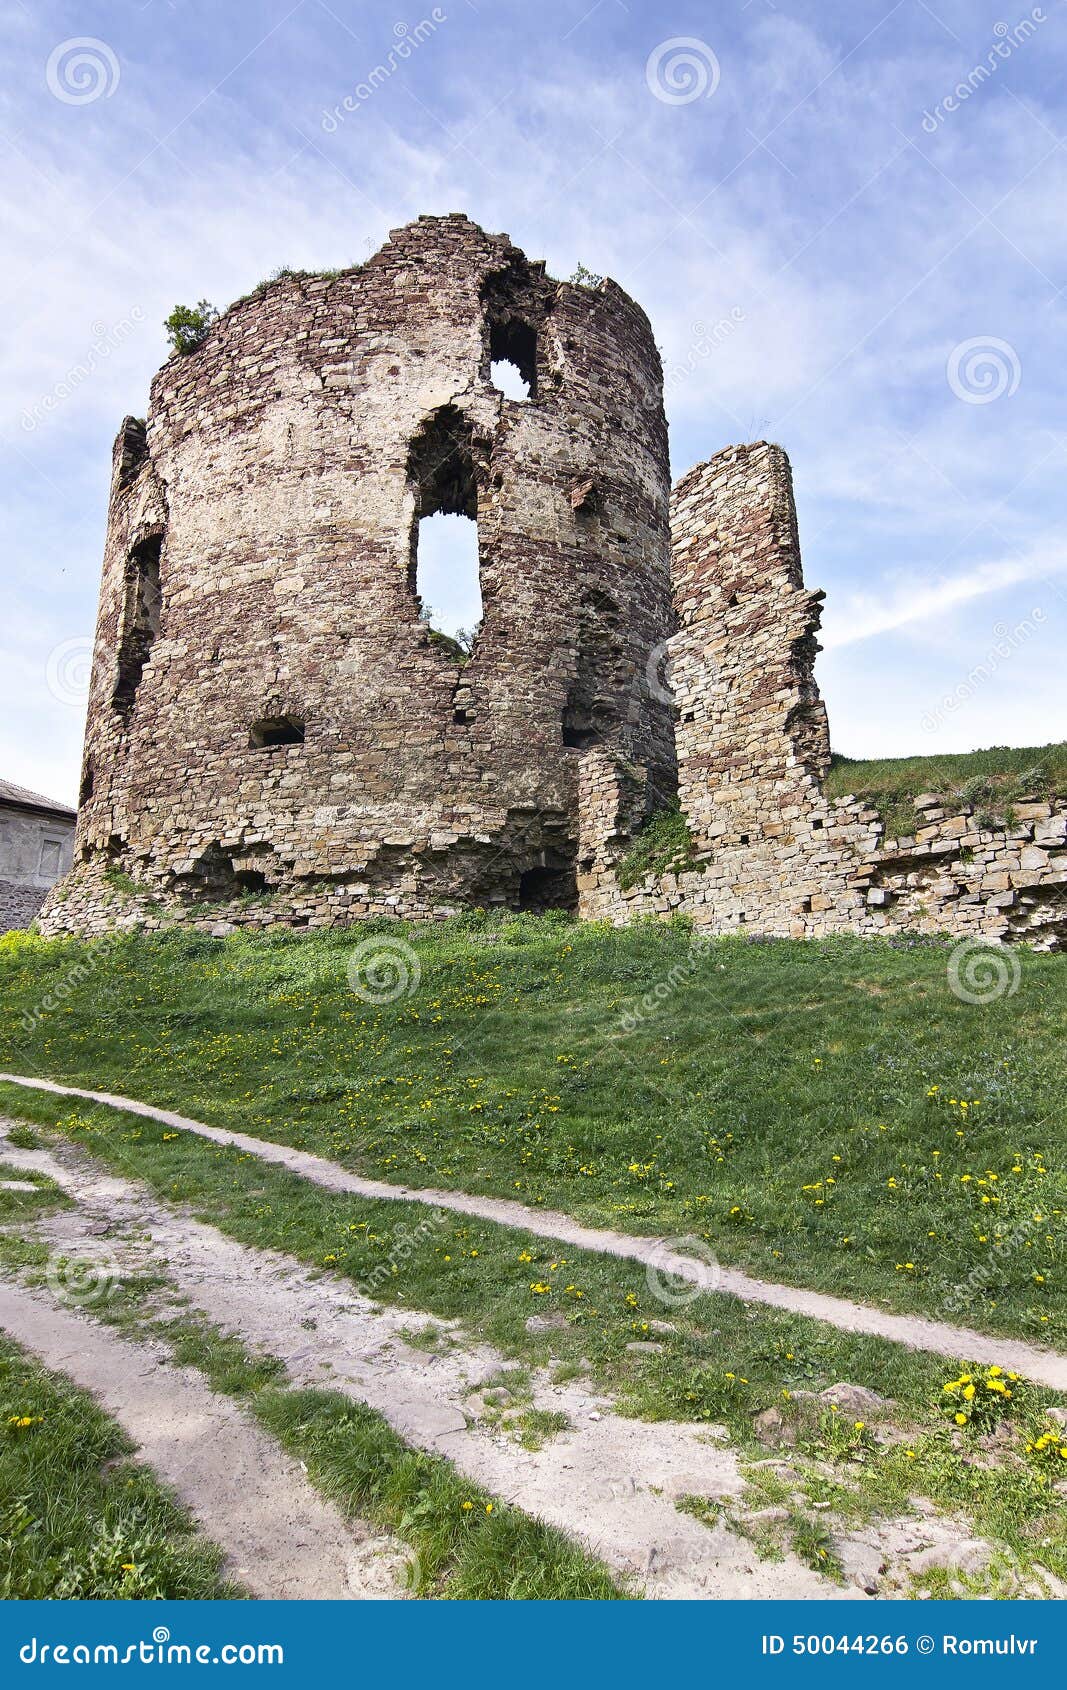 buchach castle xiv-xvi century